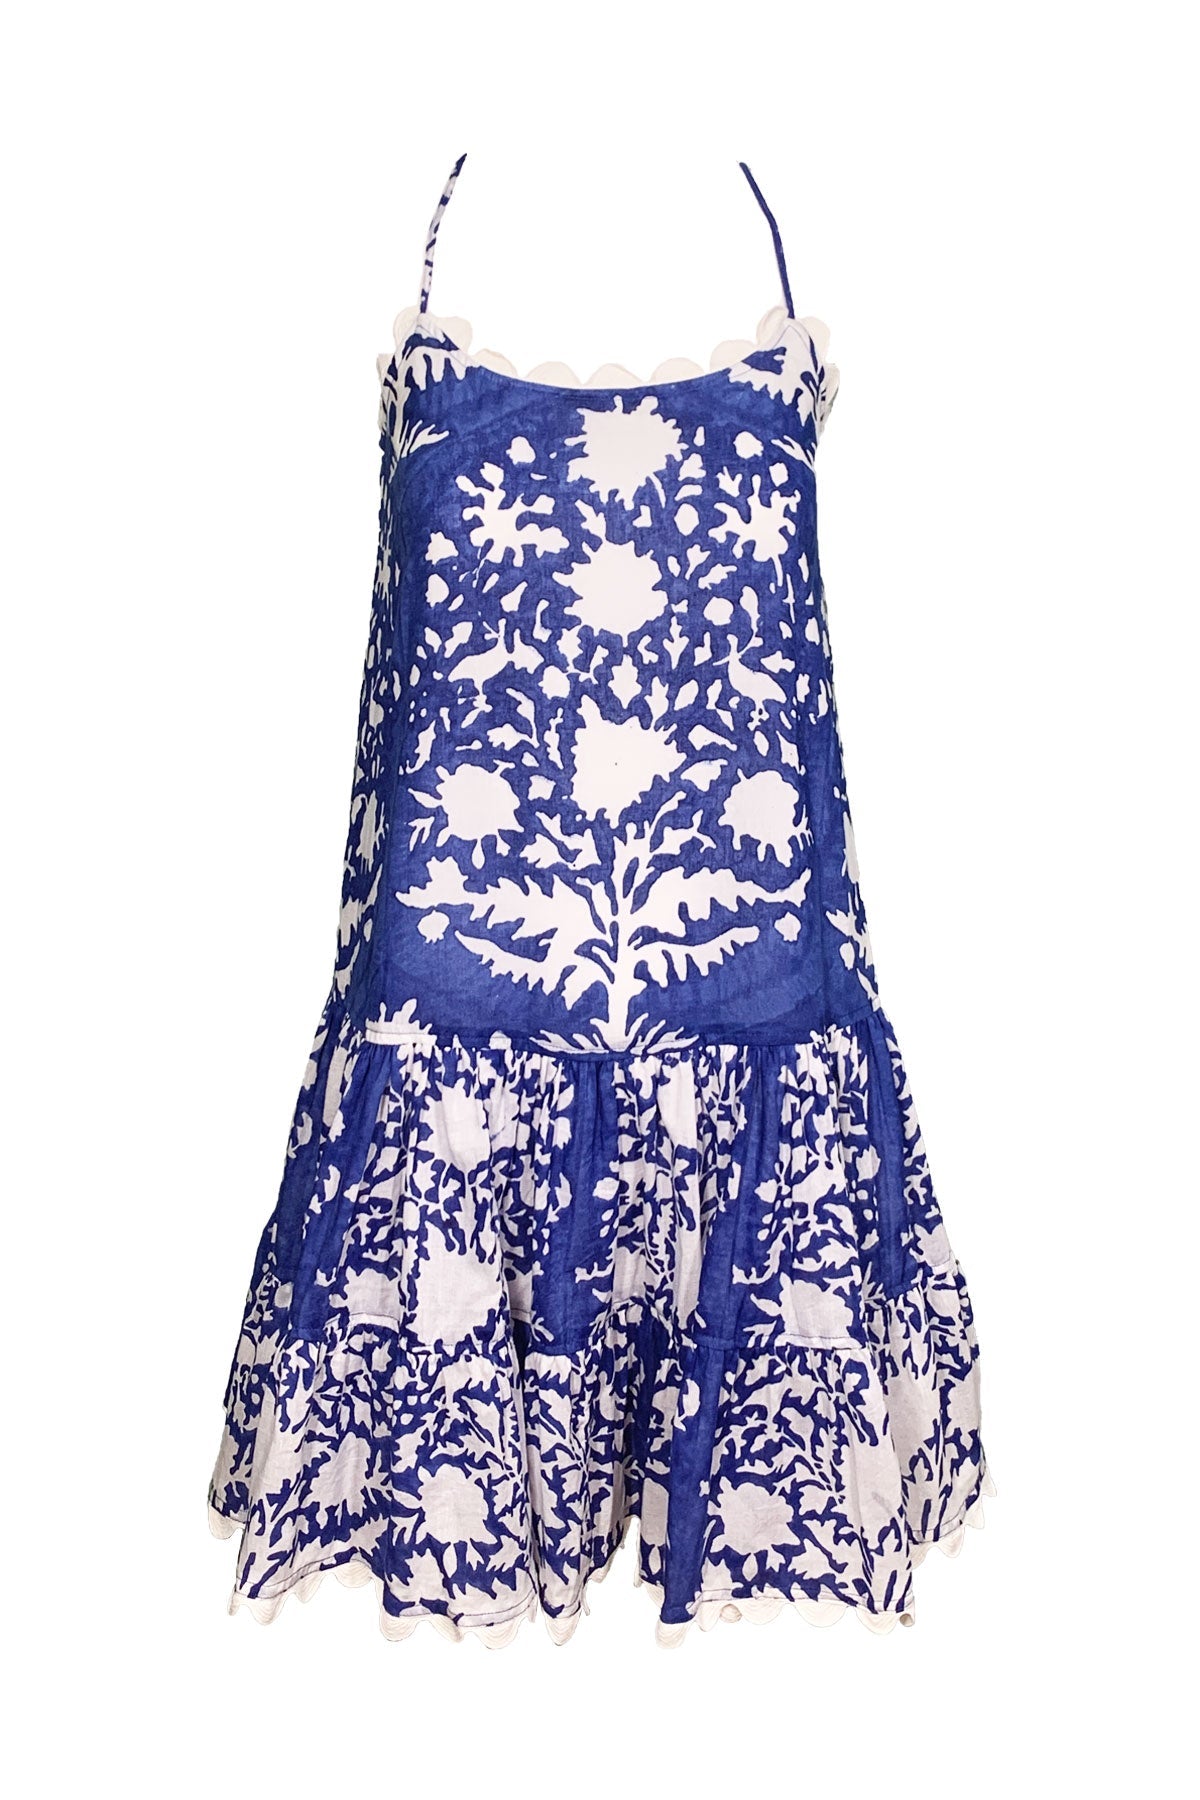 Strappy Dress in Palladio Block Print Blue - shop-olivia.com